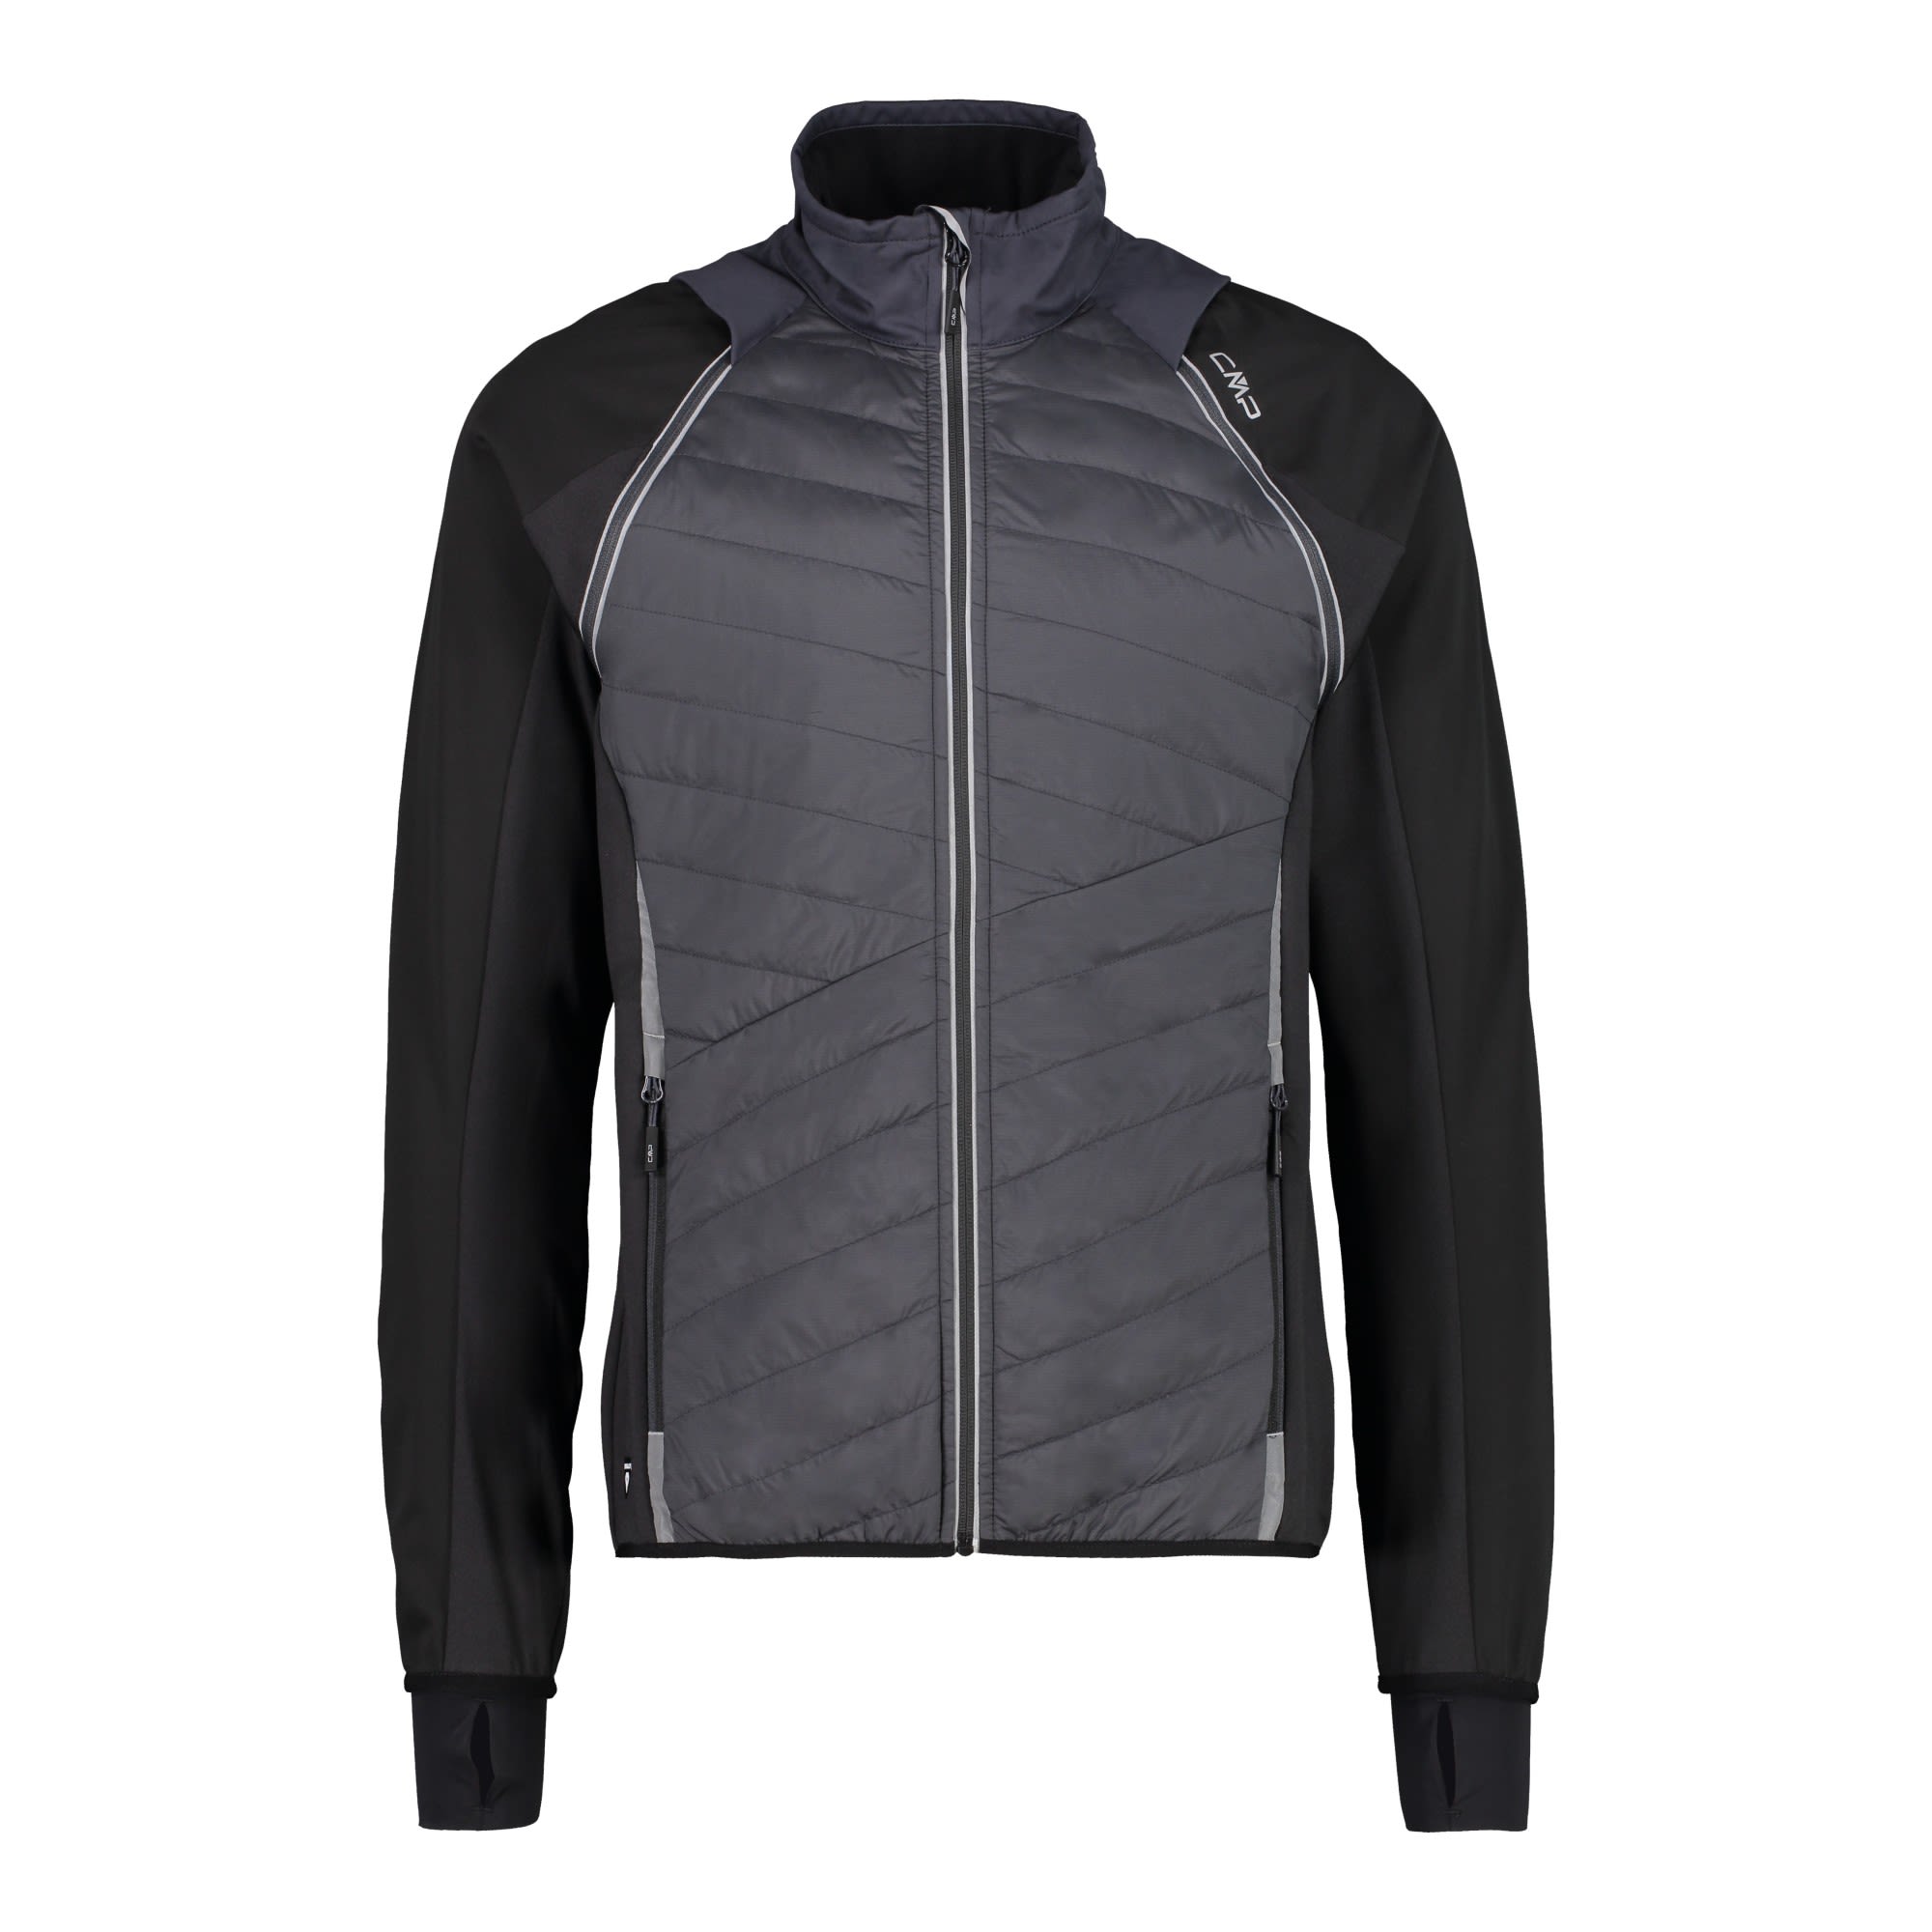 CMP Jacket Detachable Grau- Male PrimaLoft(R) Anoraks- Grsse 48 - Farbe Anthracite unter CMP